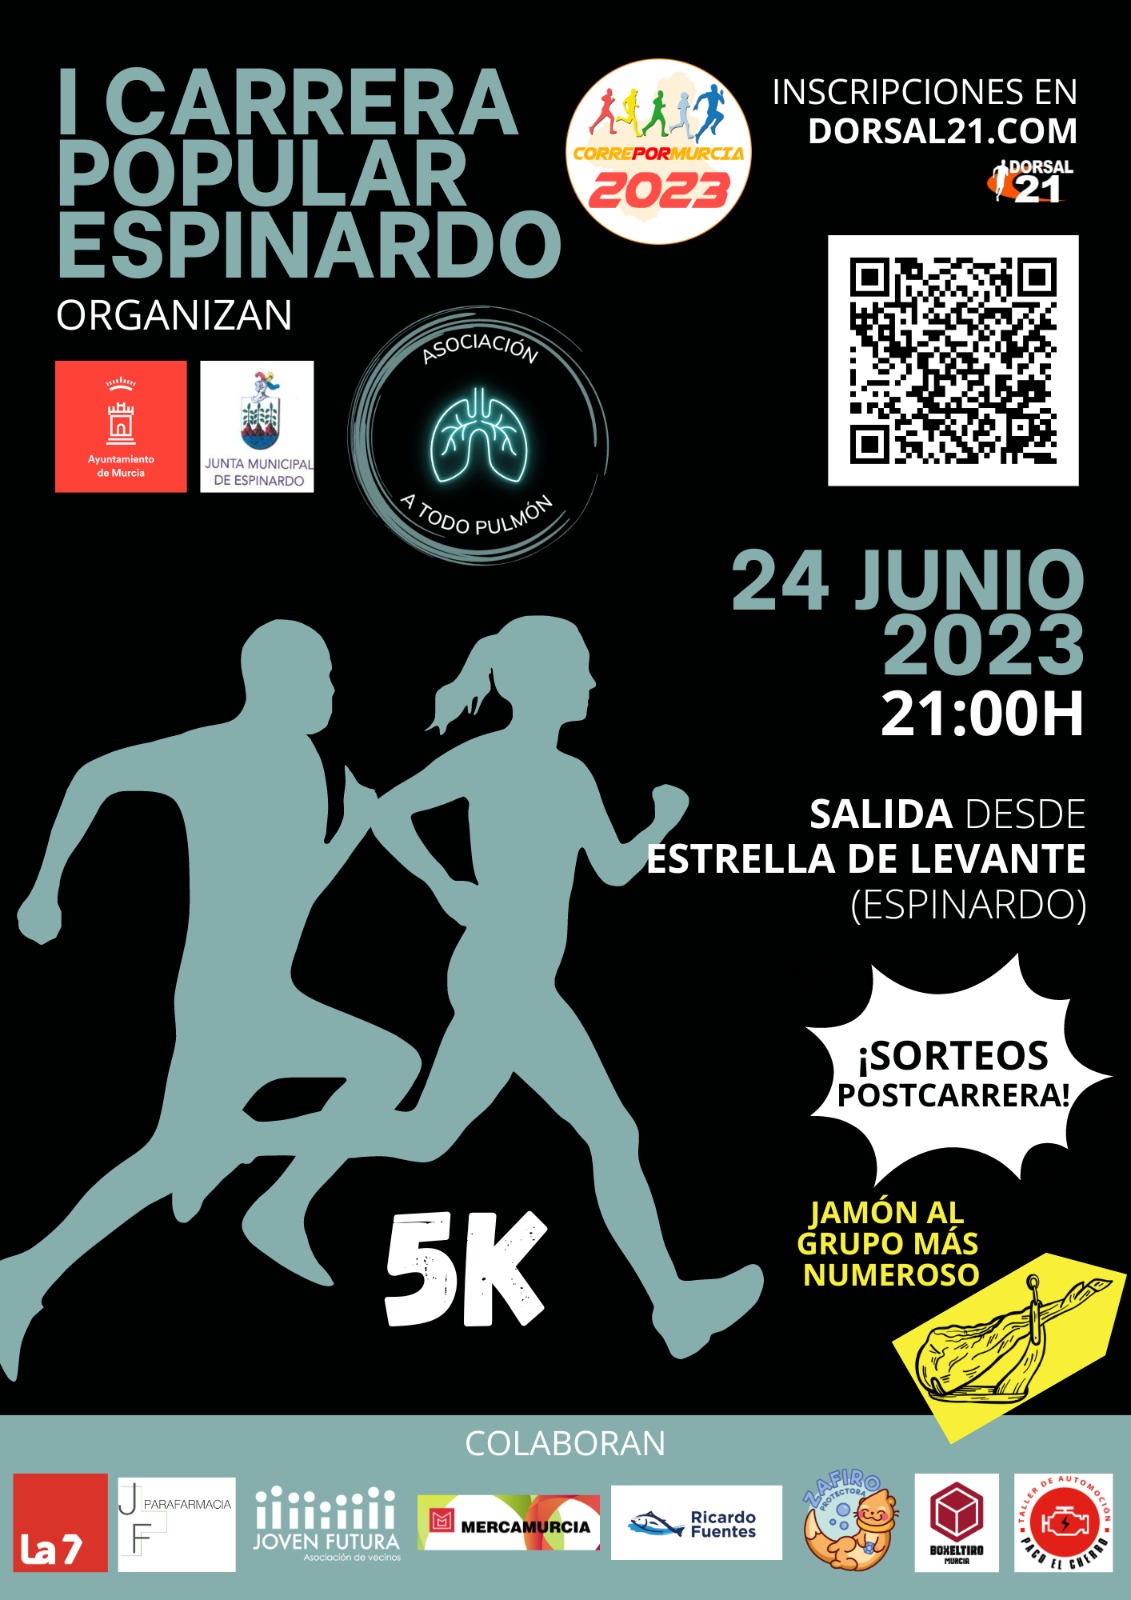 I Carrera Popular Espinardo 24-junio-2023 - cartel final